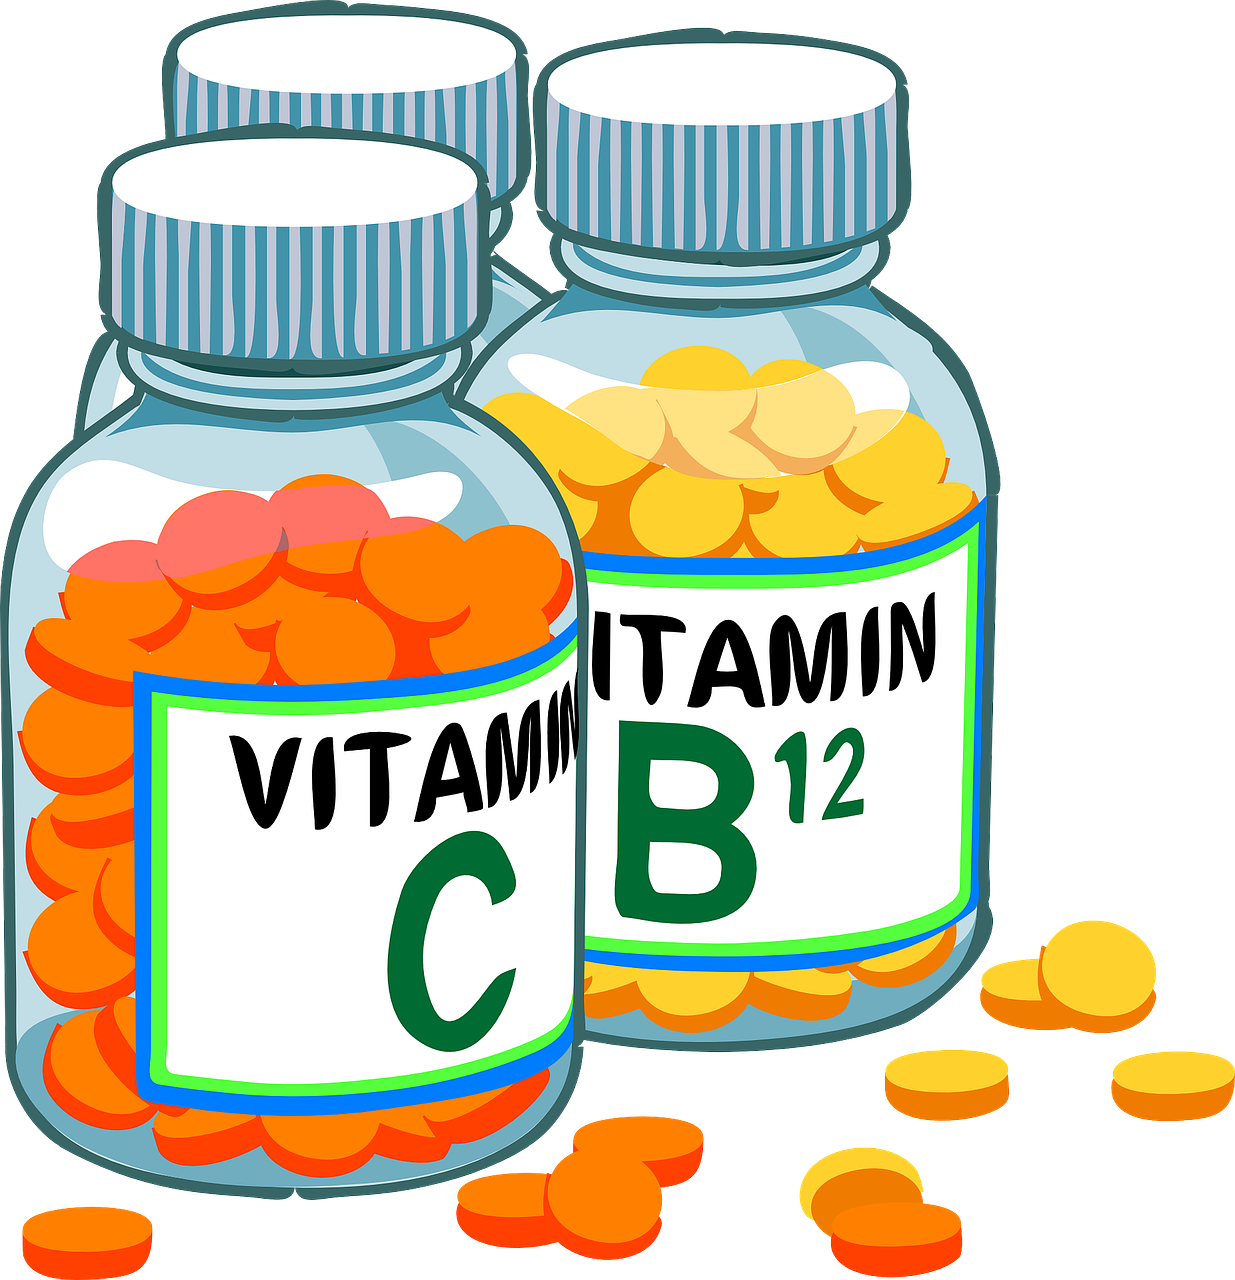 Vitamin Pills PNG HD Quality